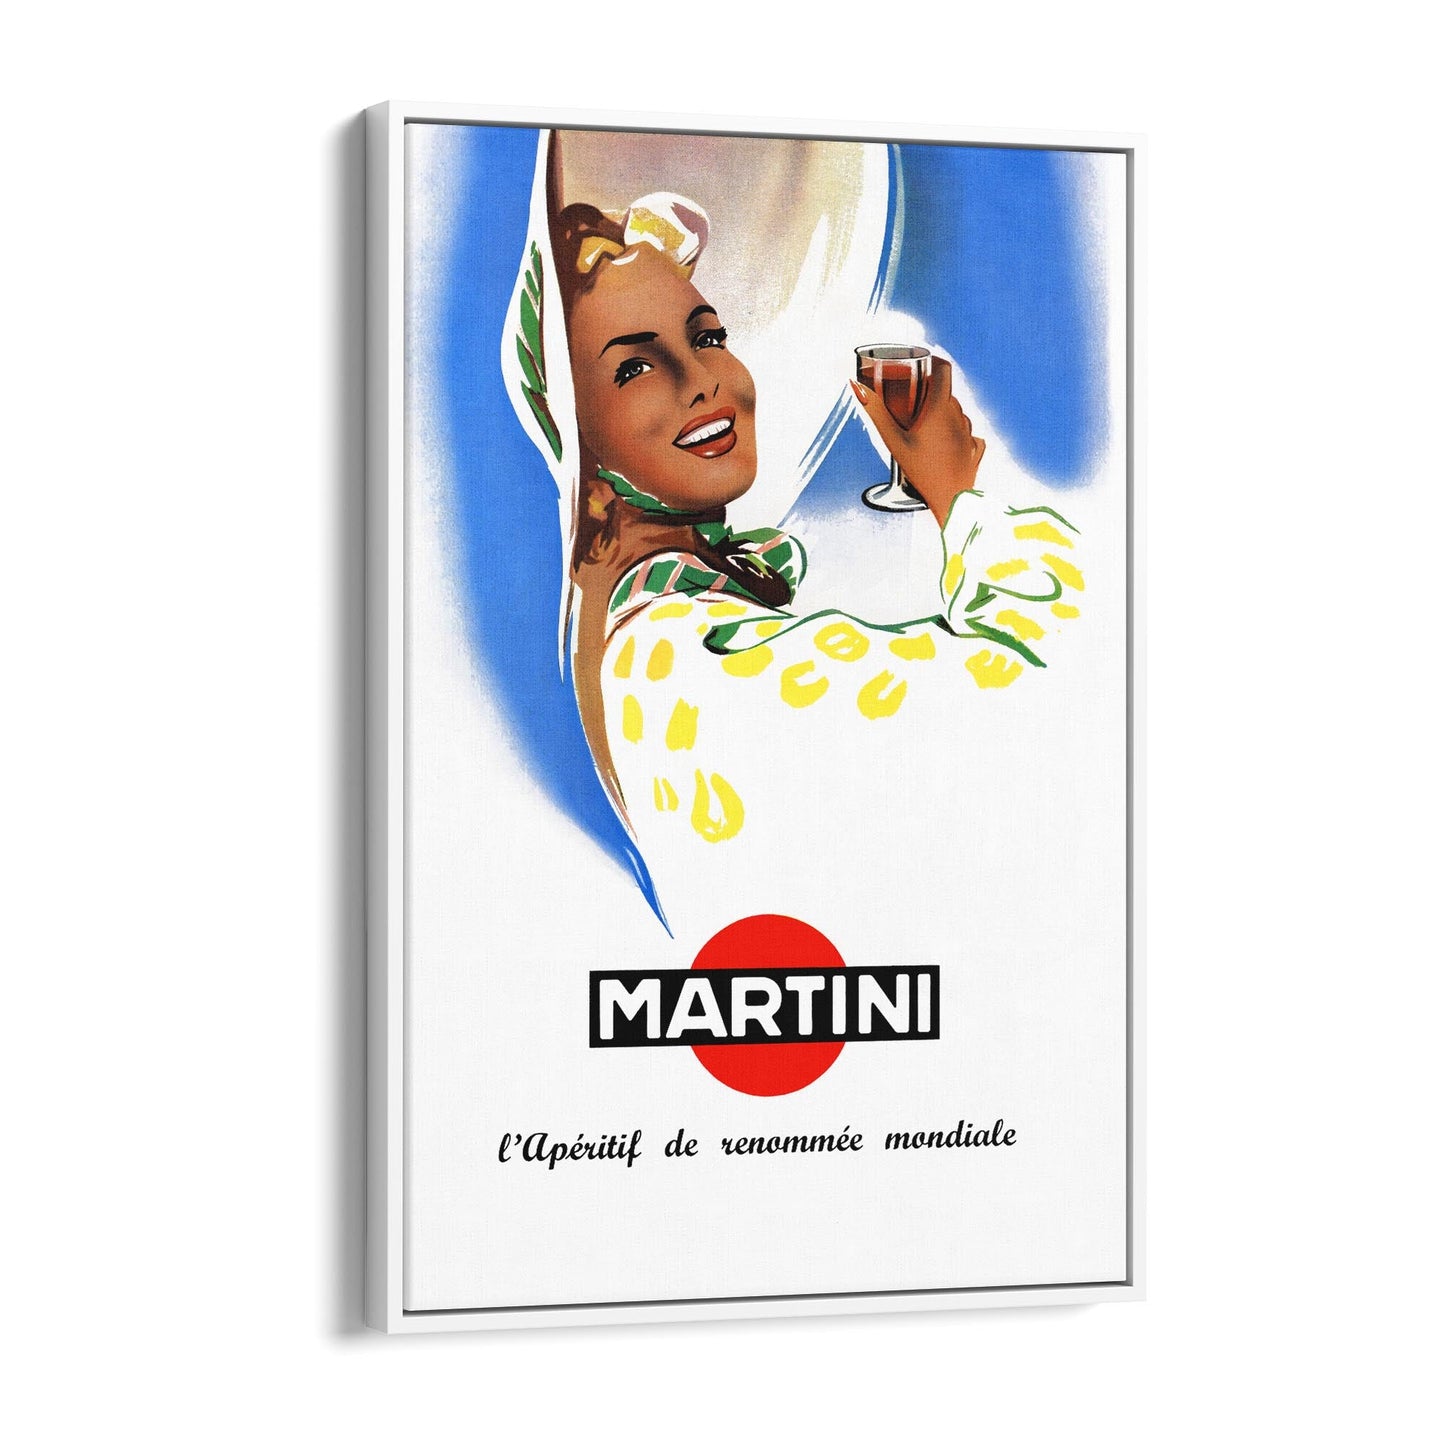 Martini | Framed Canvas Vintage Drinks Advertisement